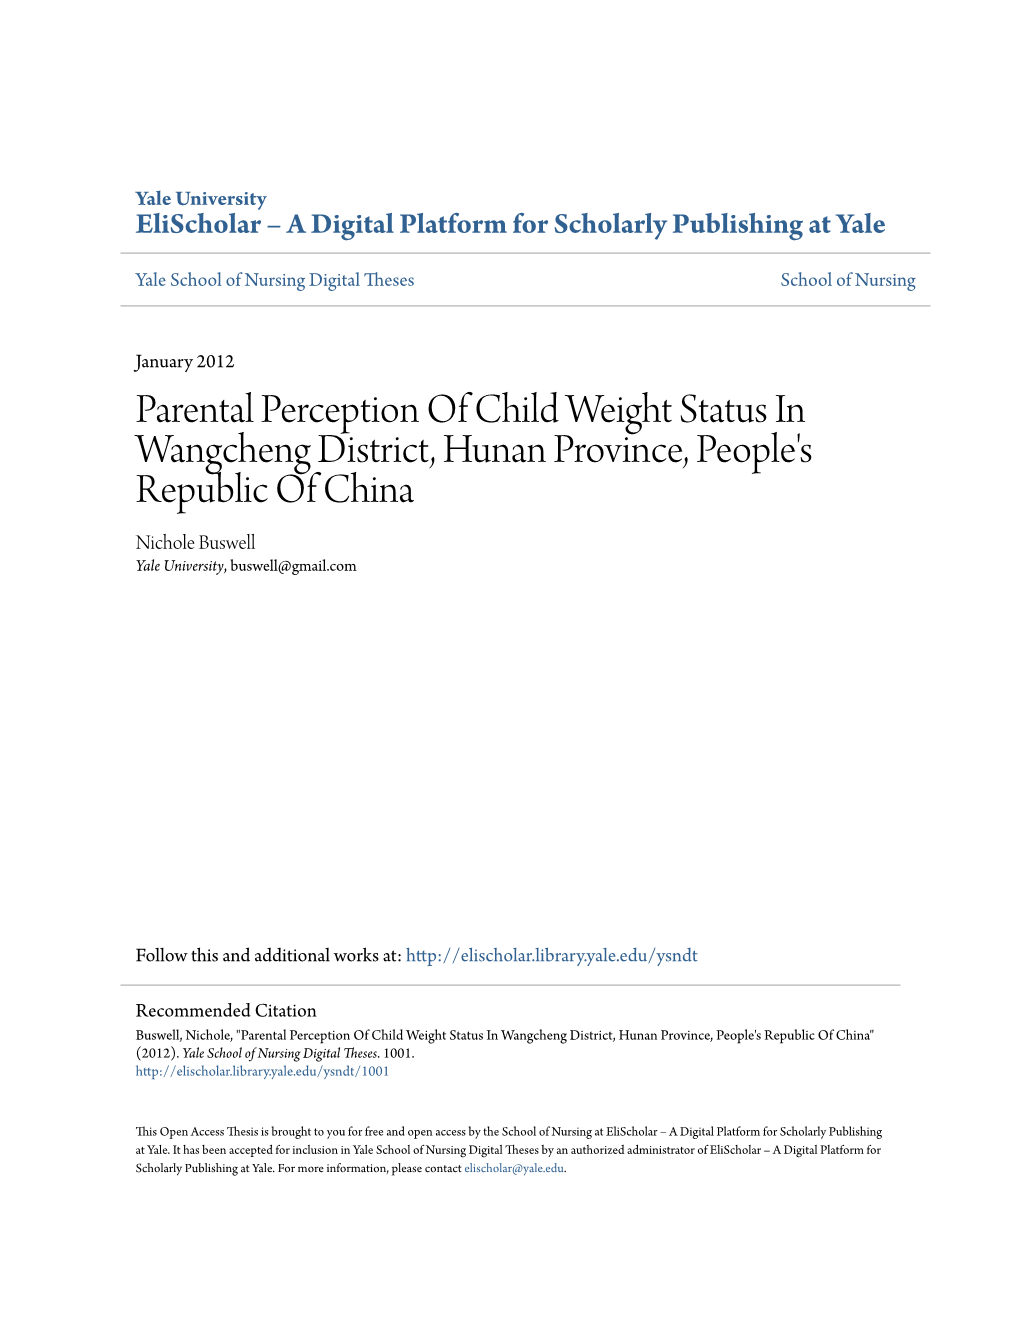 Parental Perception of Child Weight Status in Wangcheng District, Hunan Province, People's Republic of China Nichole Buswell Yale University, Buswell@Gmail.Com